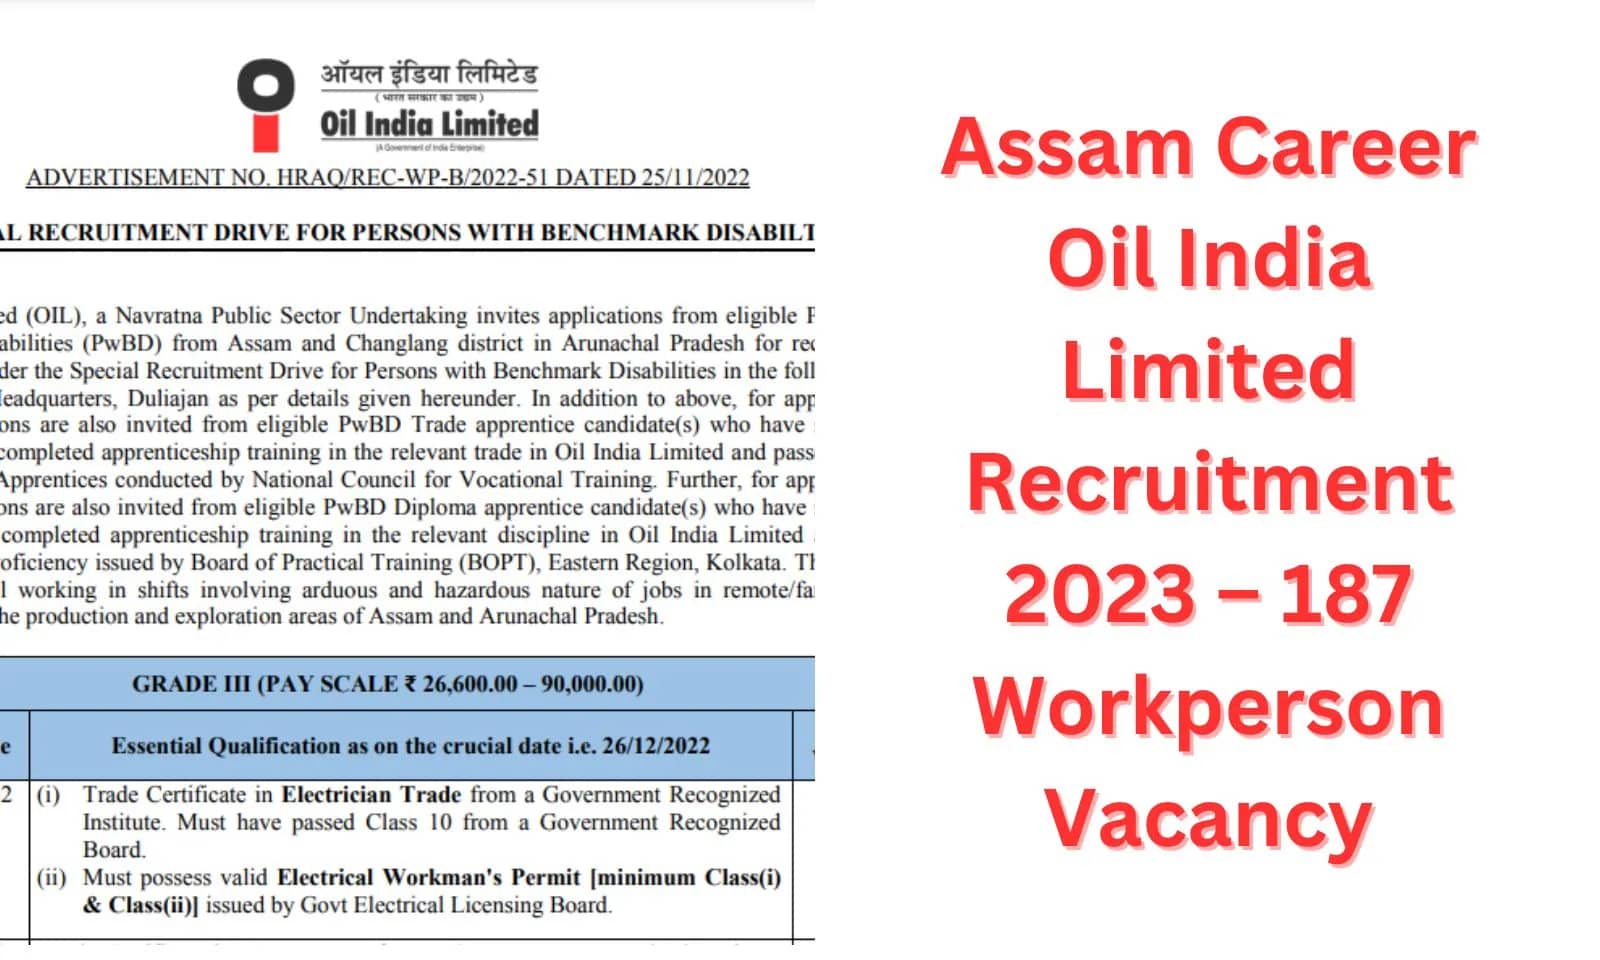 Assam Career Oil India Limited Recruitment 2023